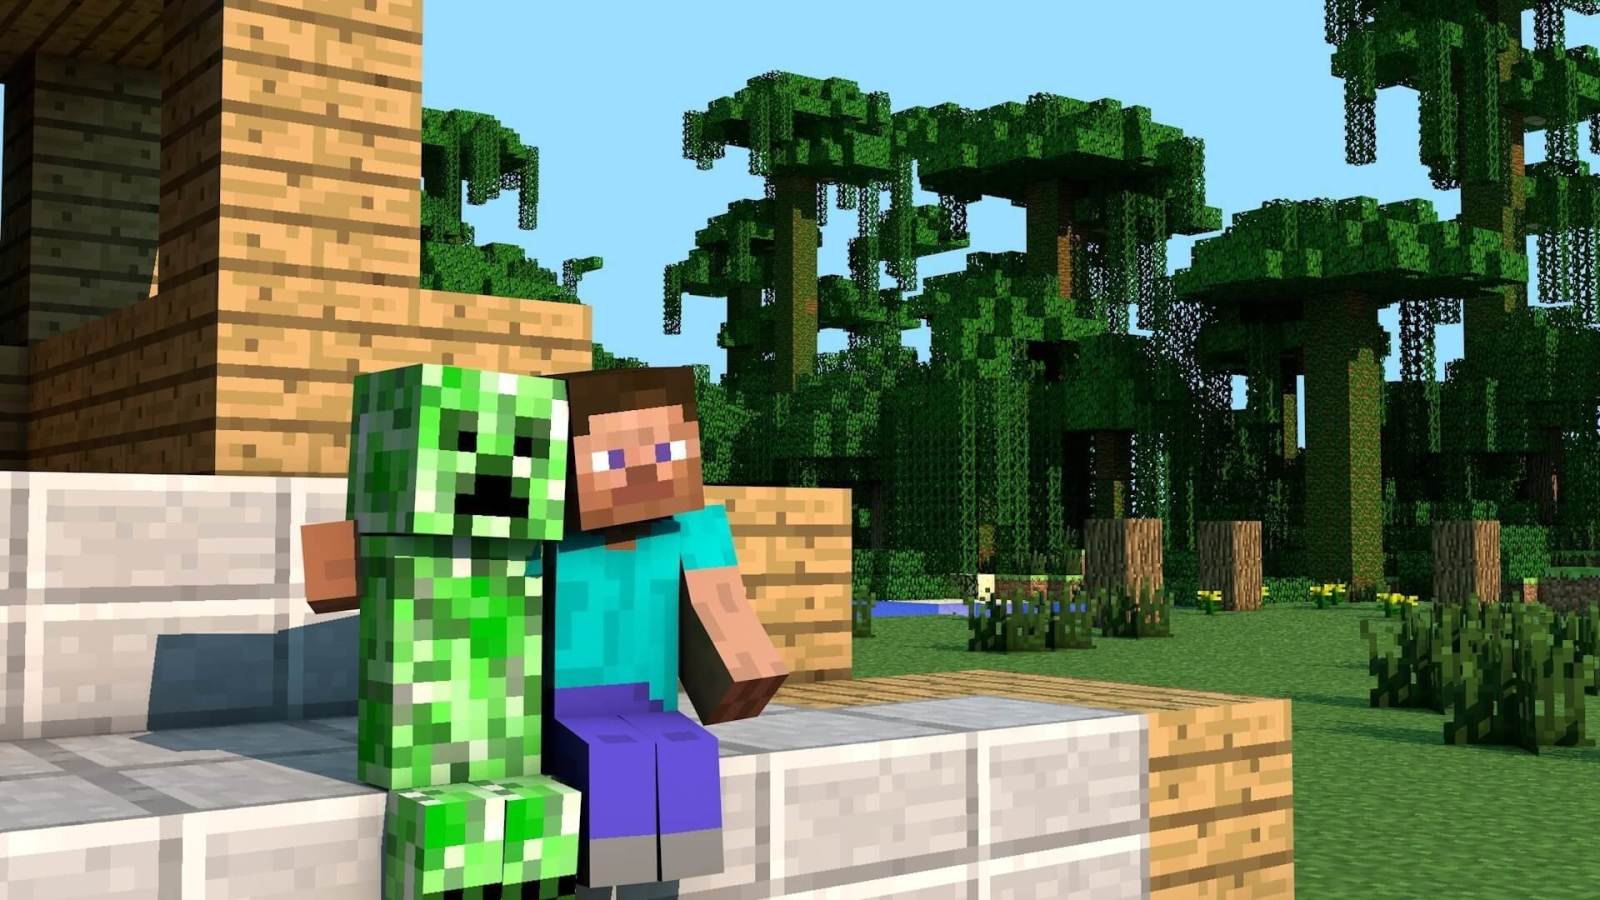 Minecraft Steve - Original image